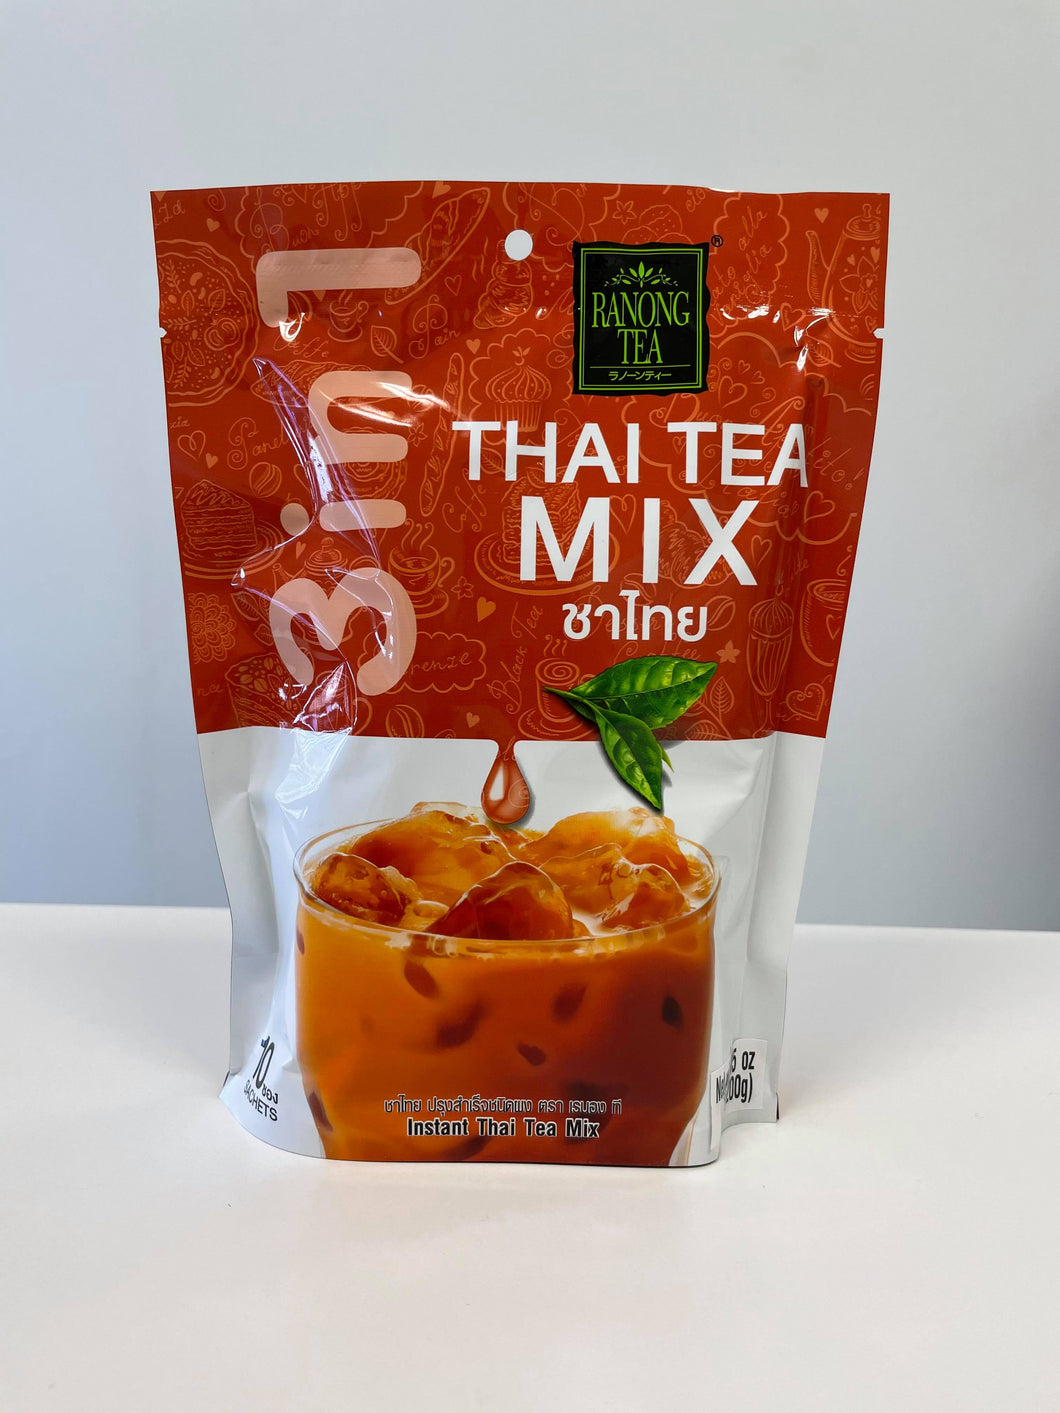 Ranong Tea Brand Instant Thai tea Mix (3 in 1)